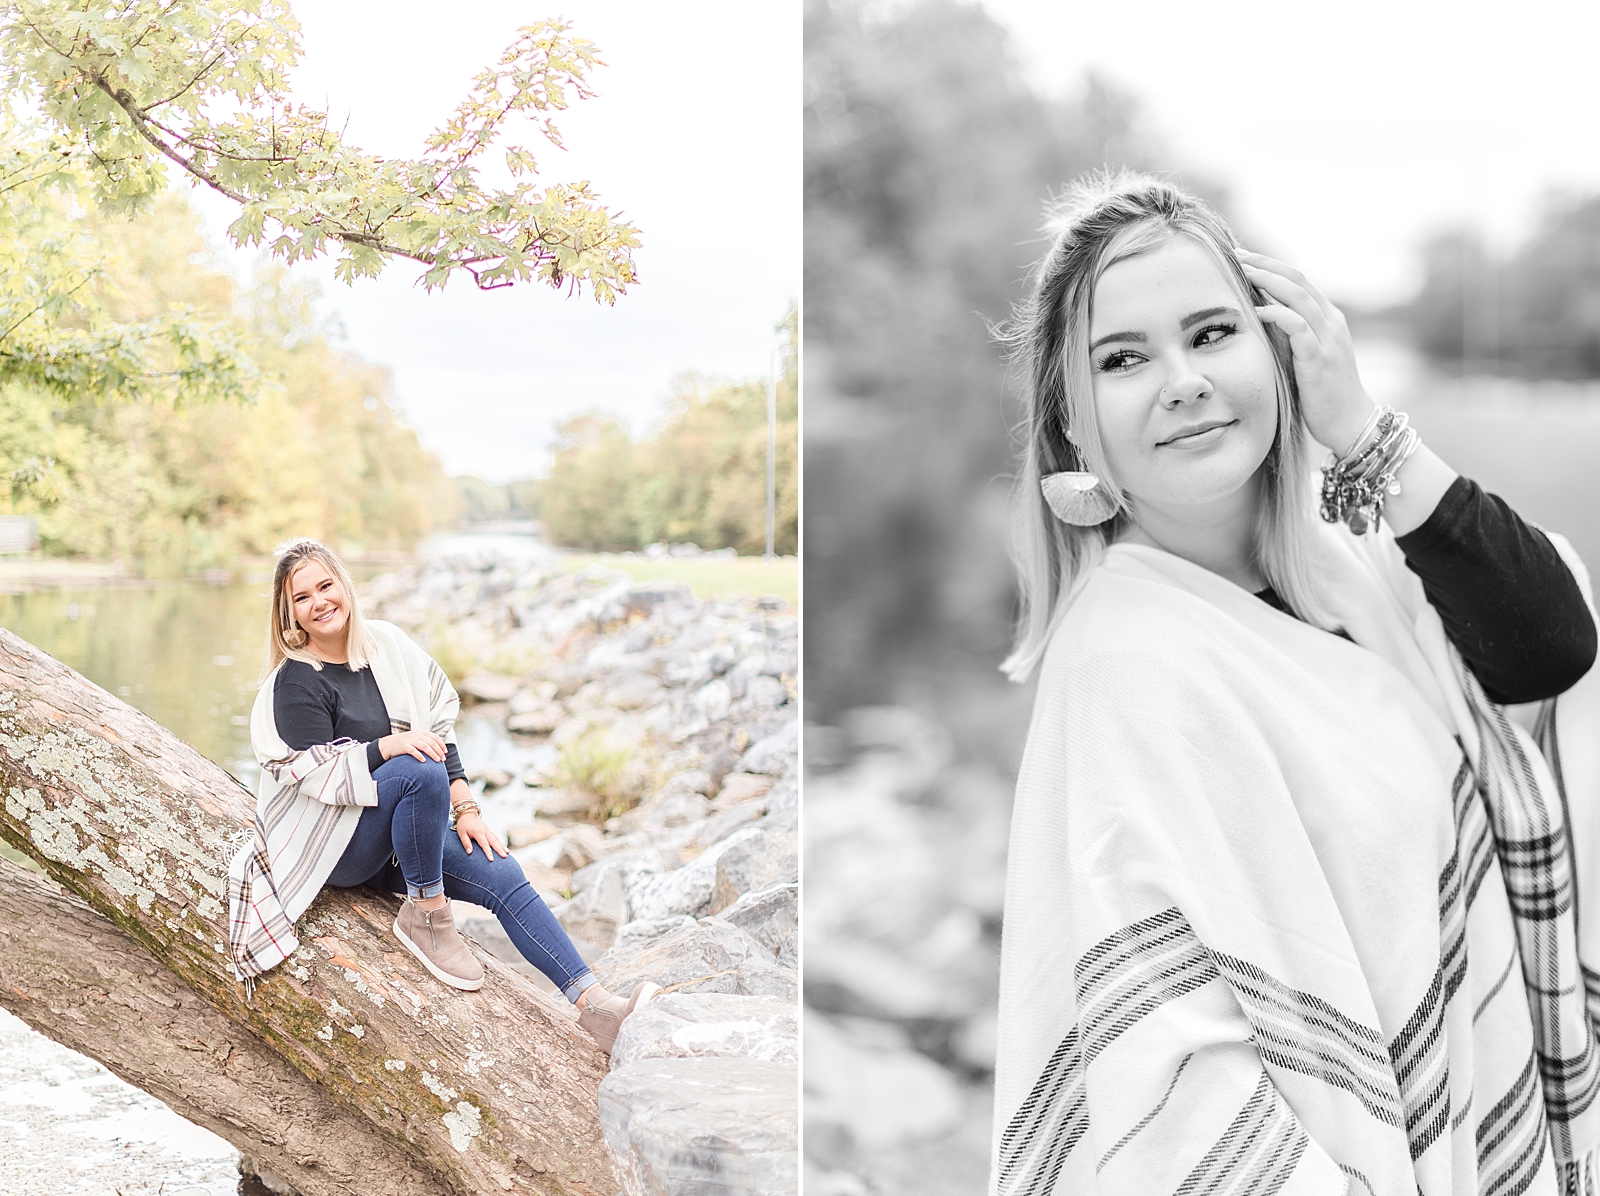 Wildwood Park Senior Session | Staunton Photographer | Virginia Wedding and Portrait Photographer | Fall Senior Session